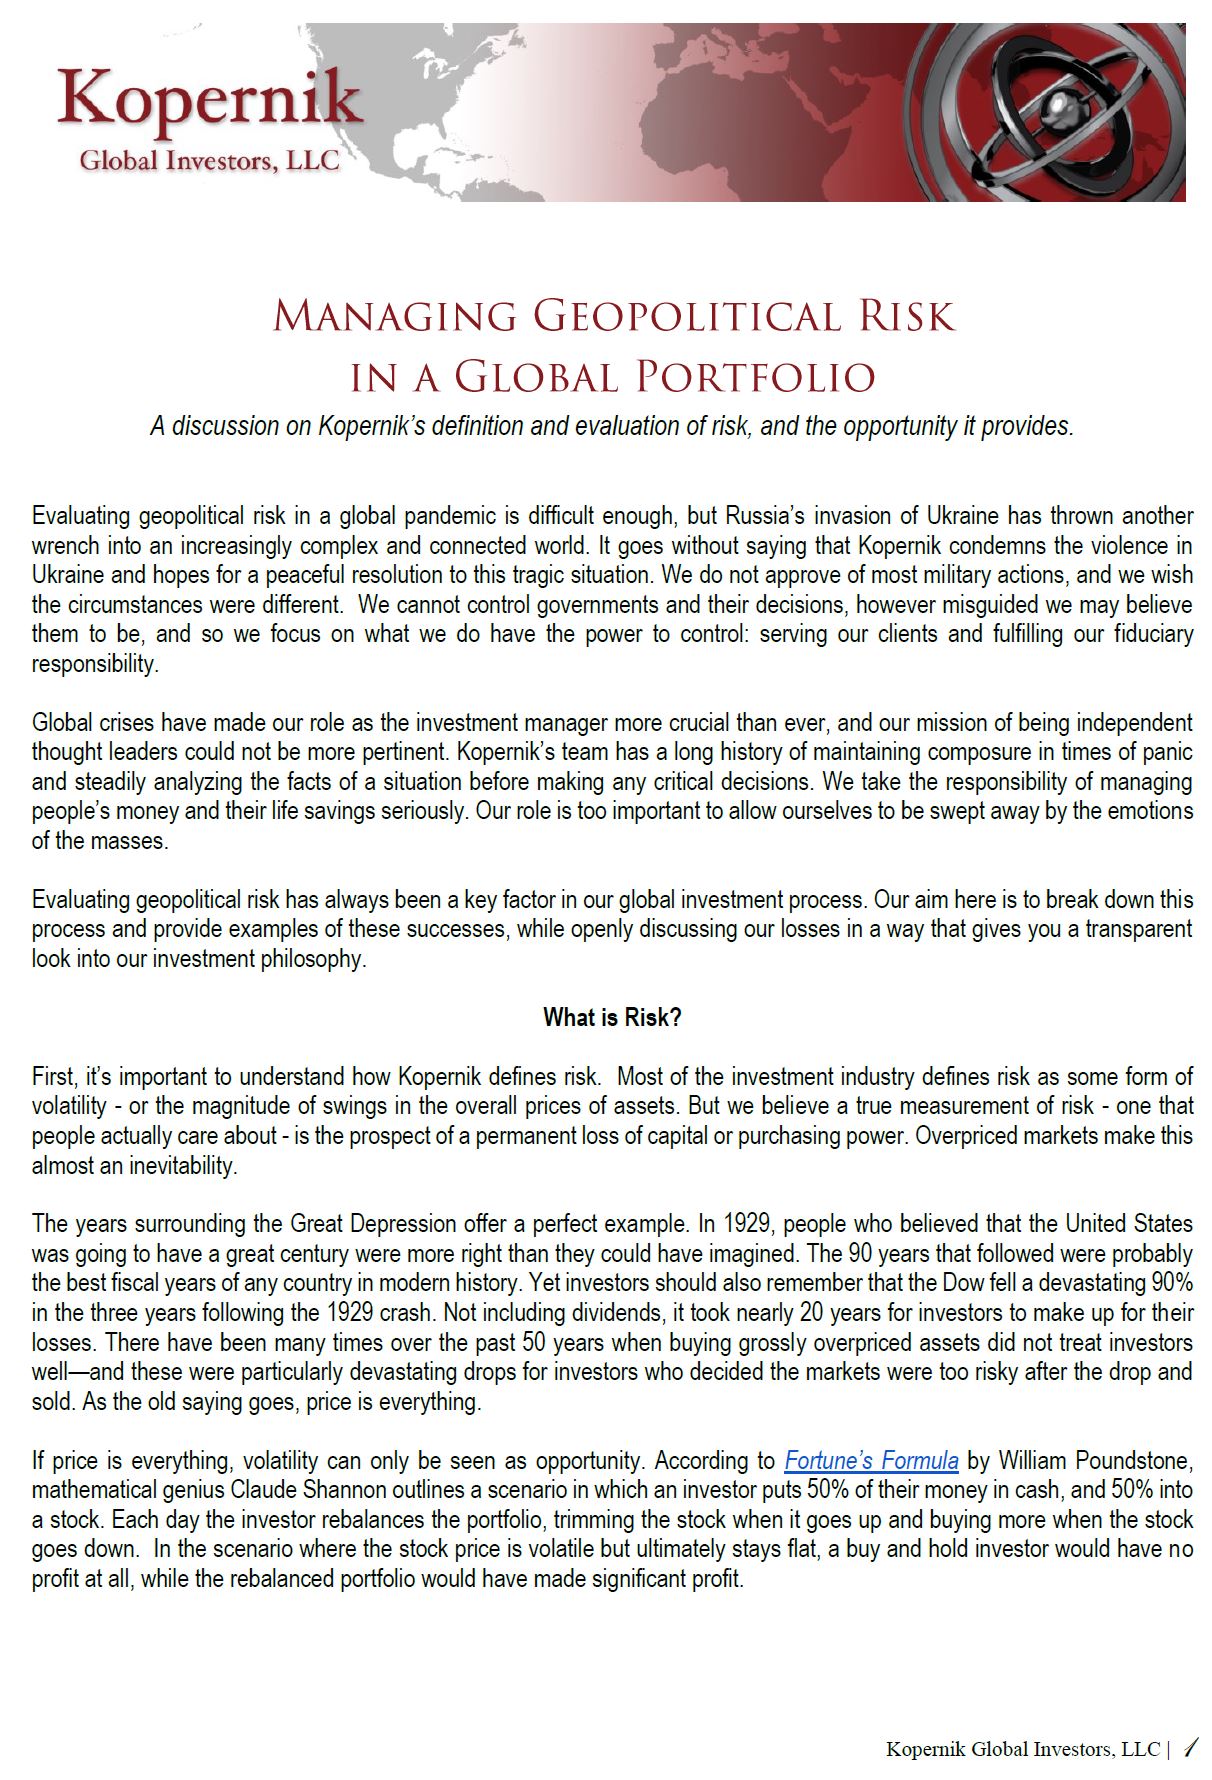 Managing Geopolitical Risk in a Global Portfolio (July 2022)